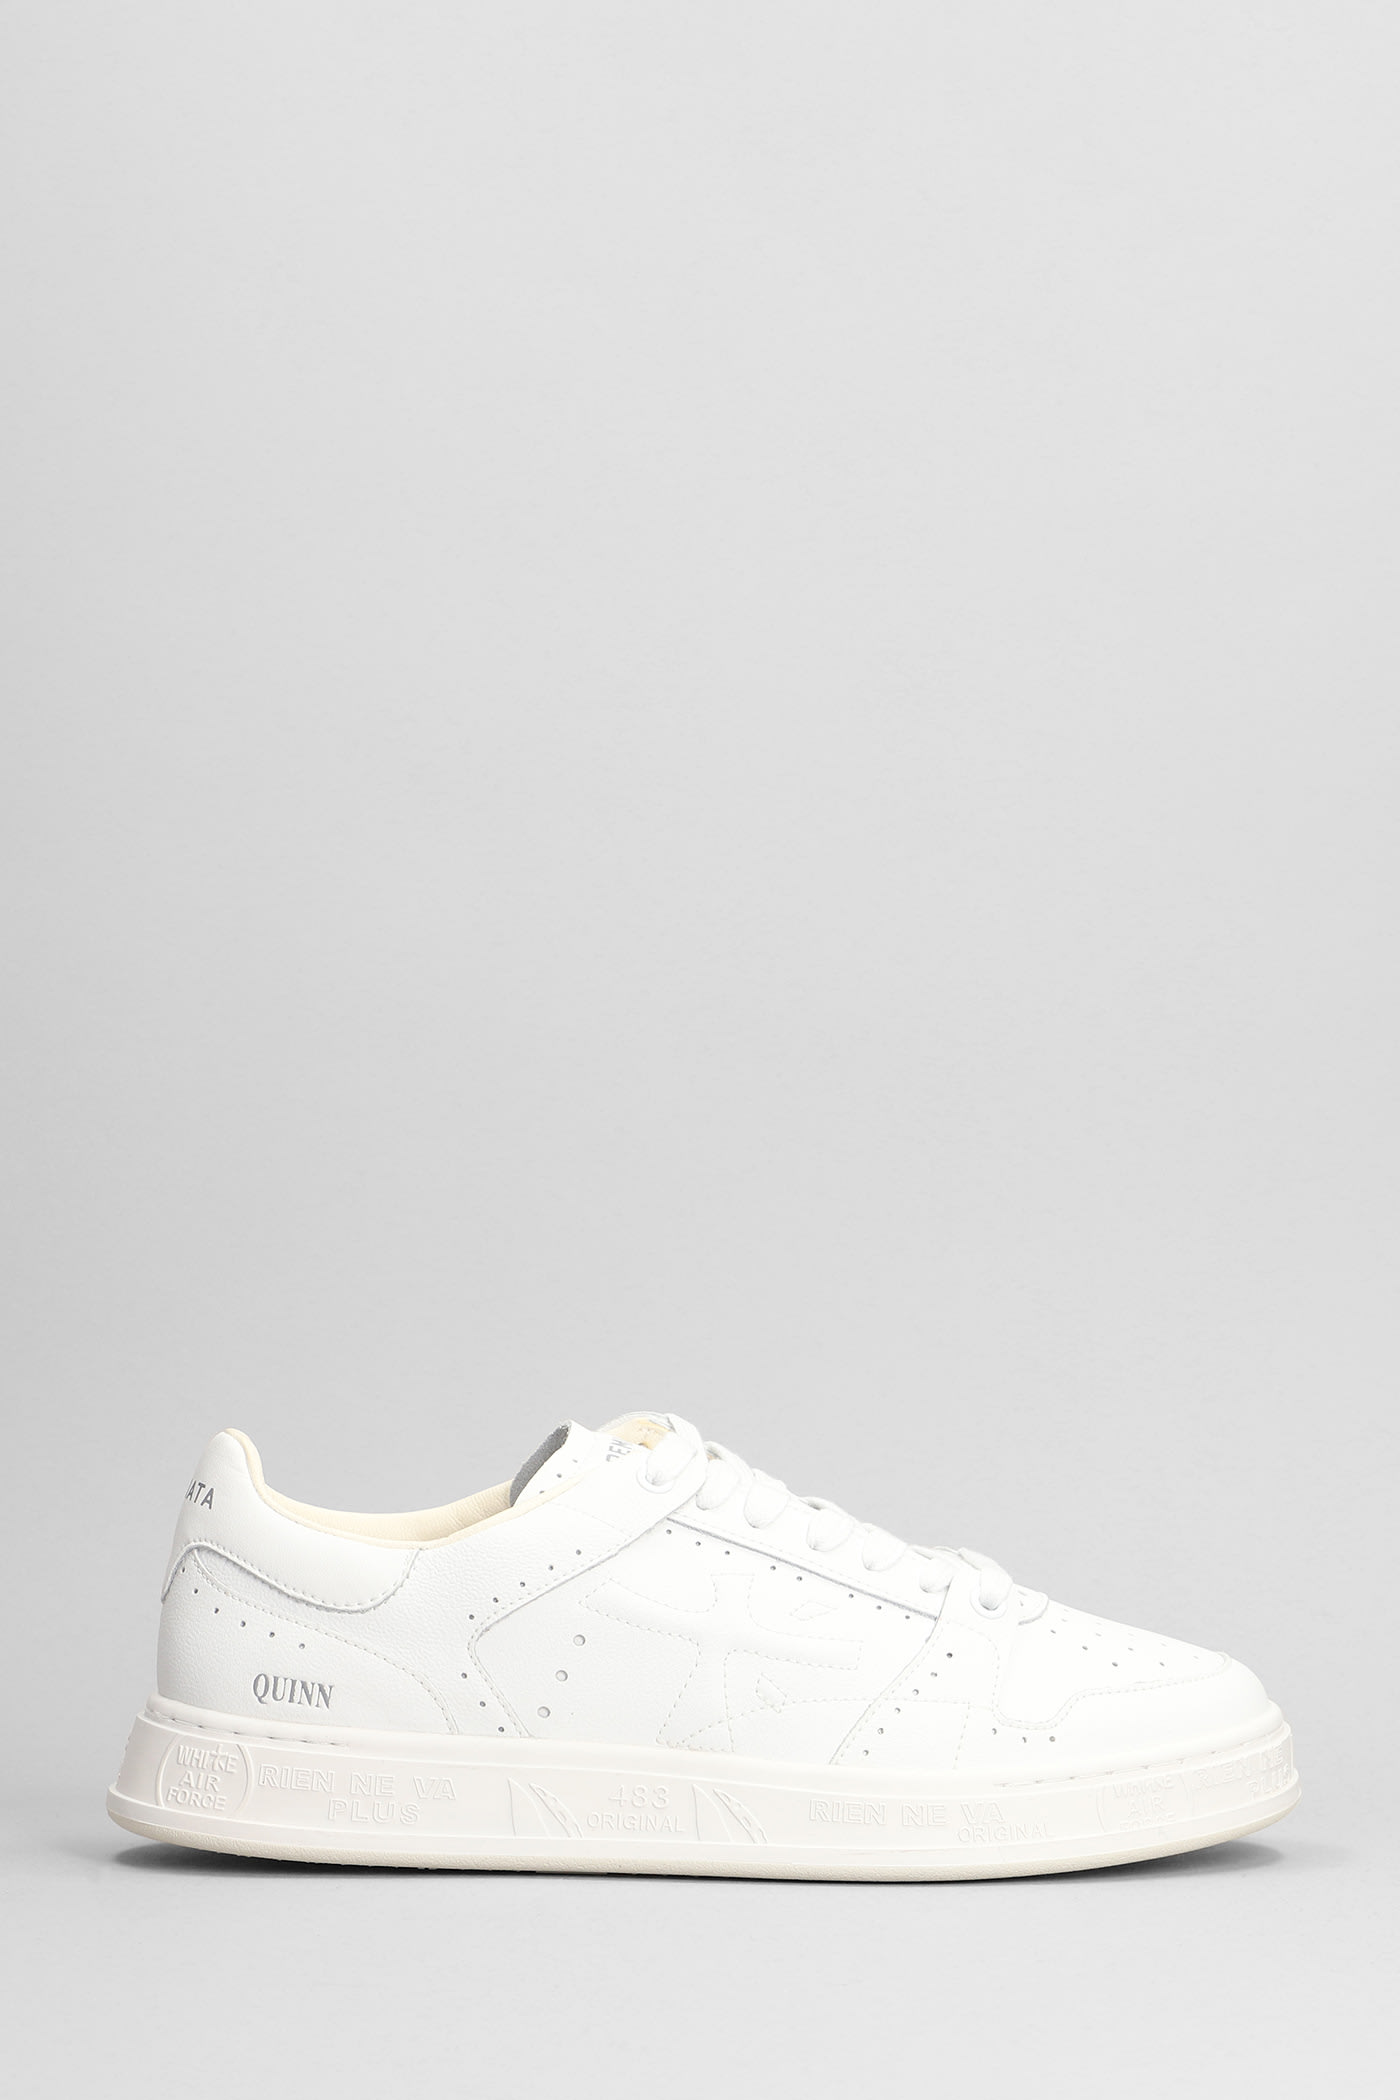 Premiata Quinn Sneakers In White Leather